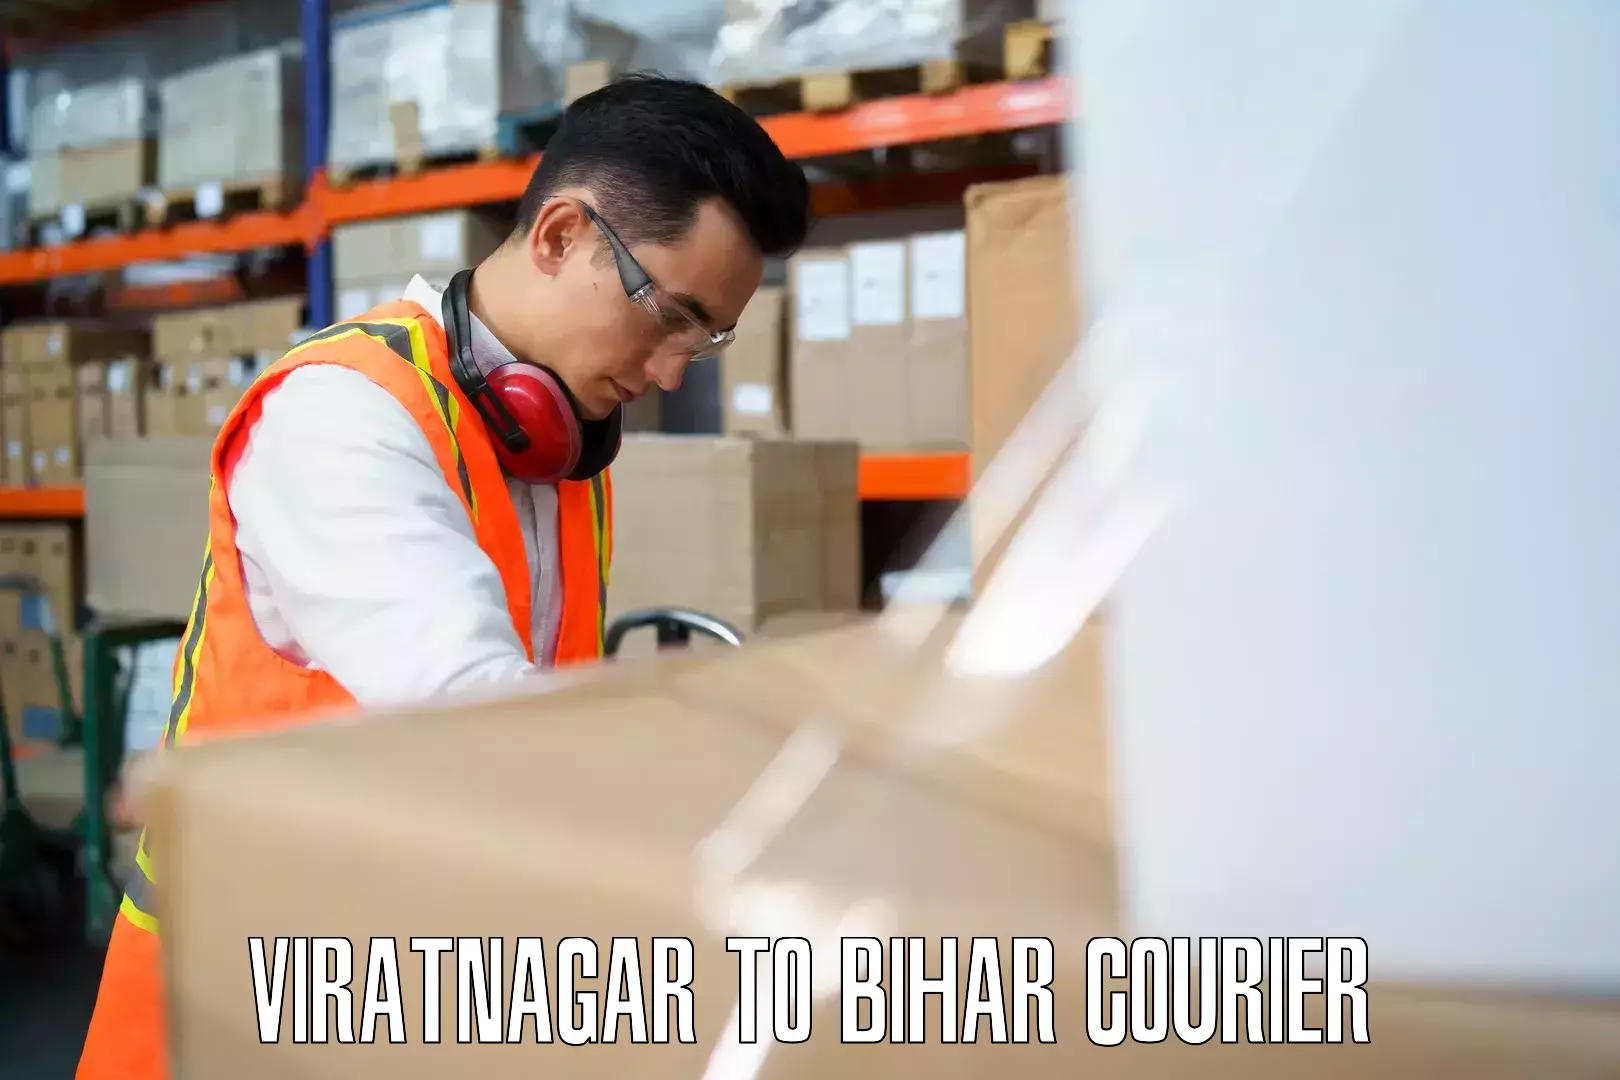 Luggage shipment specialists Viratnagar to Fatwah